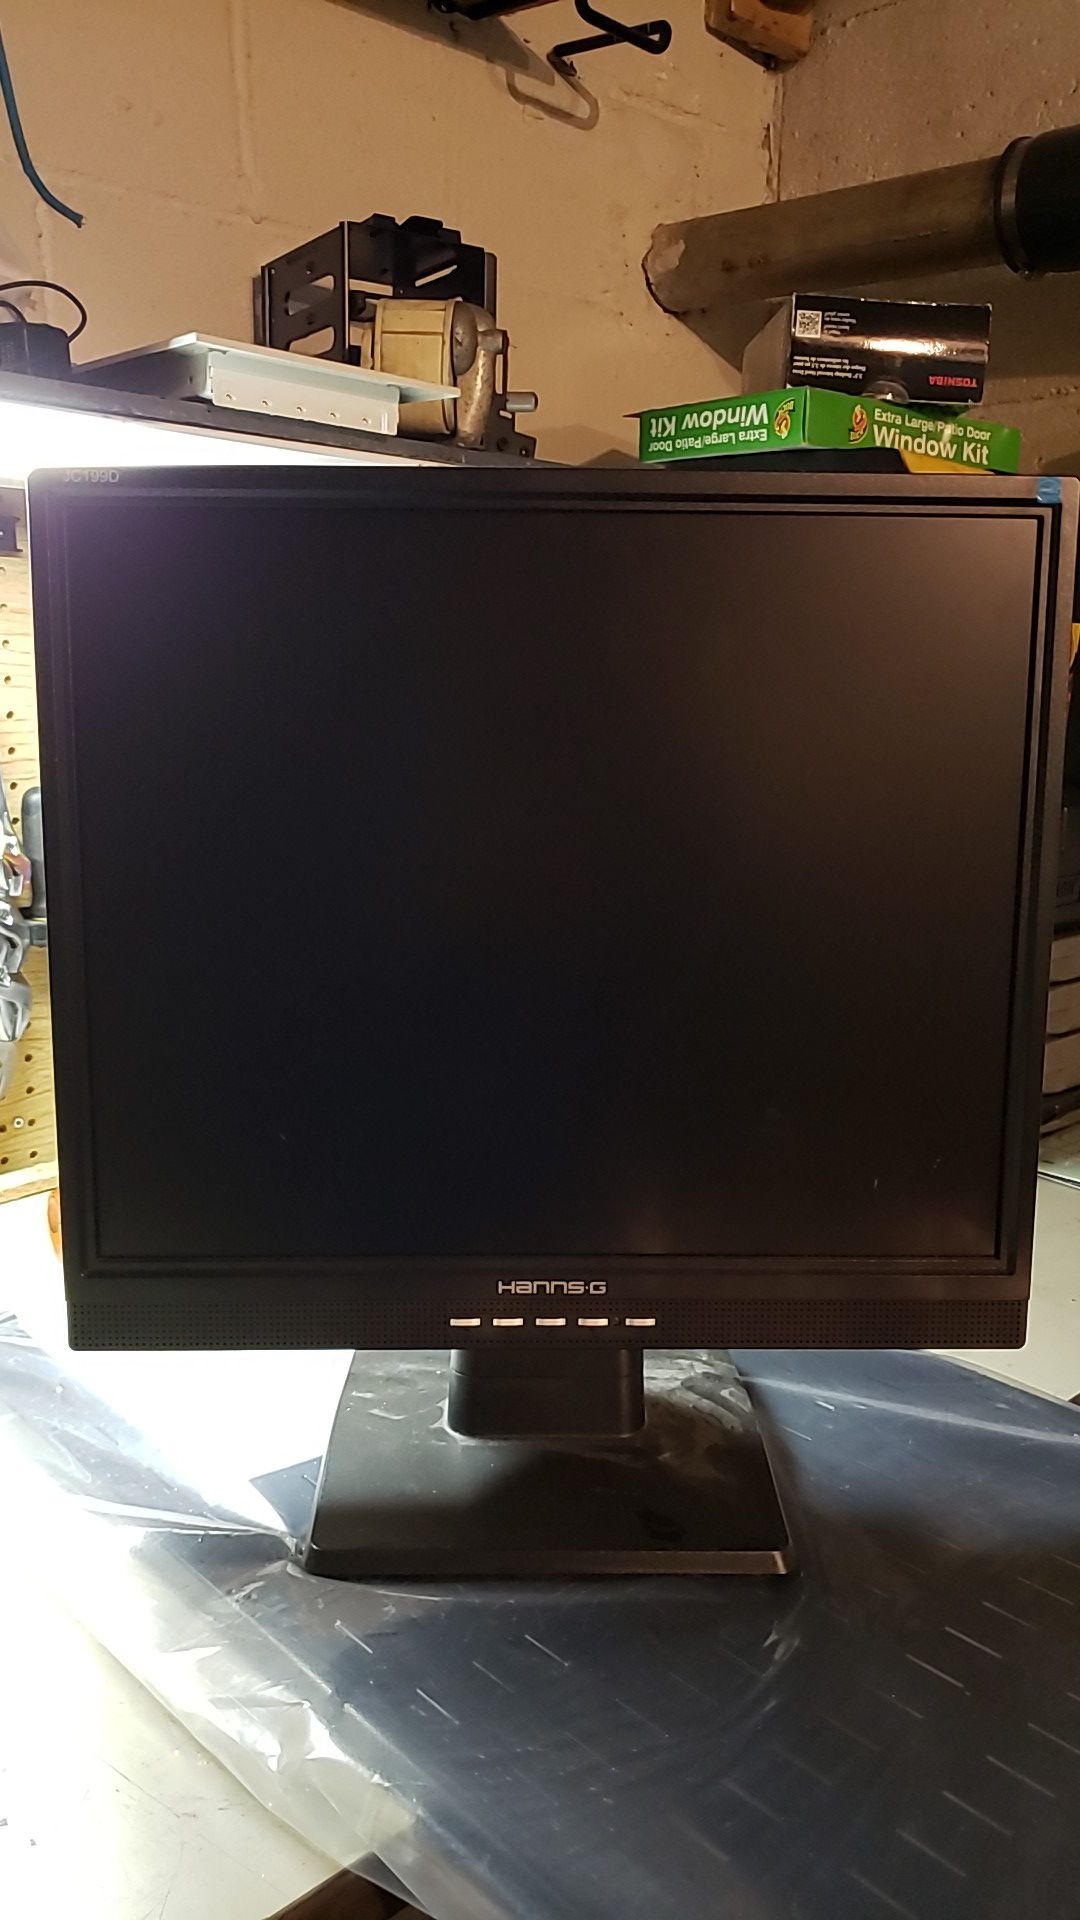 Hanns G computer monitor